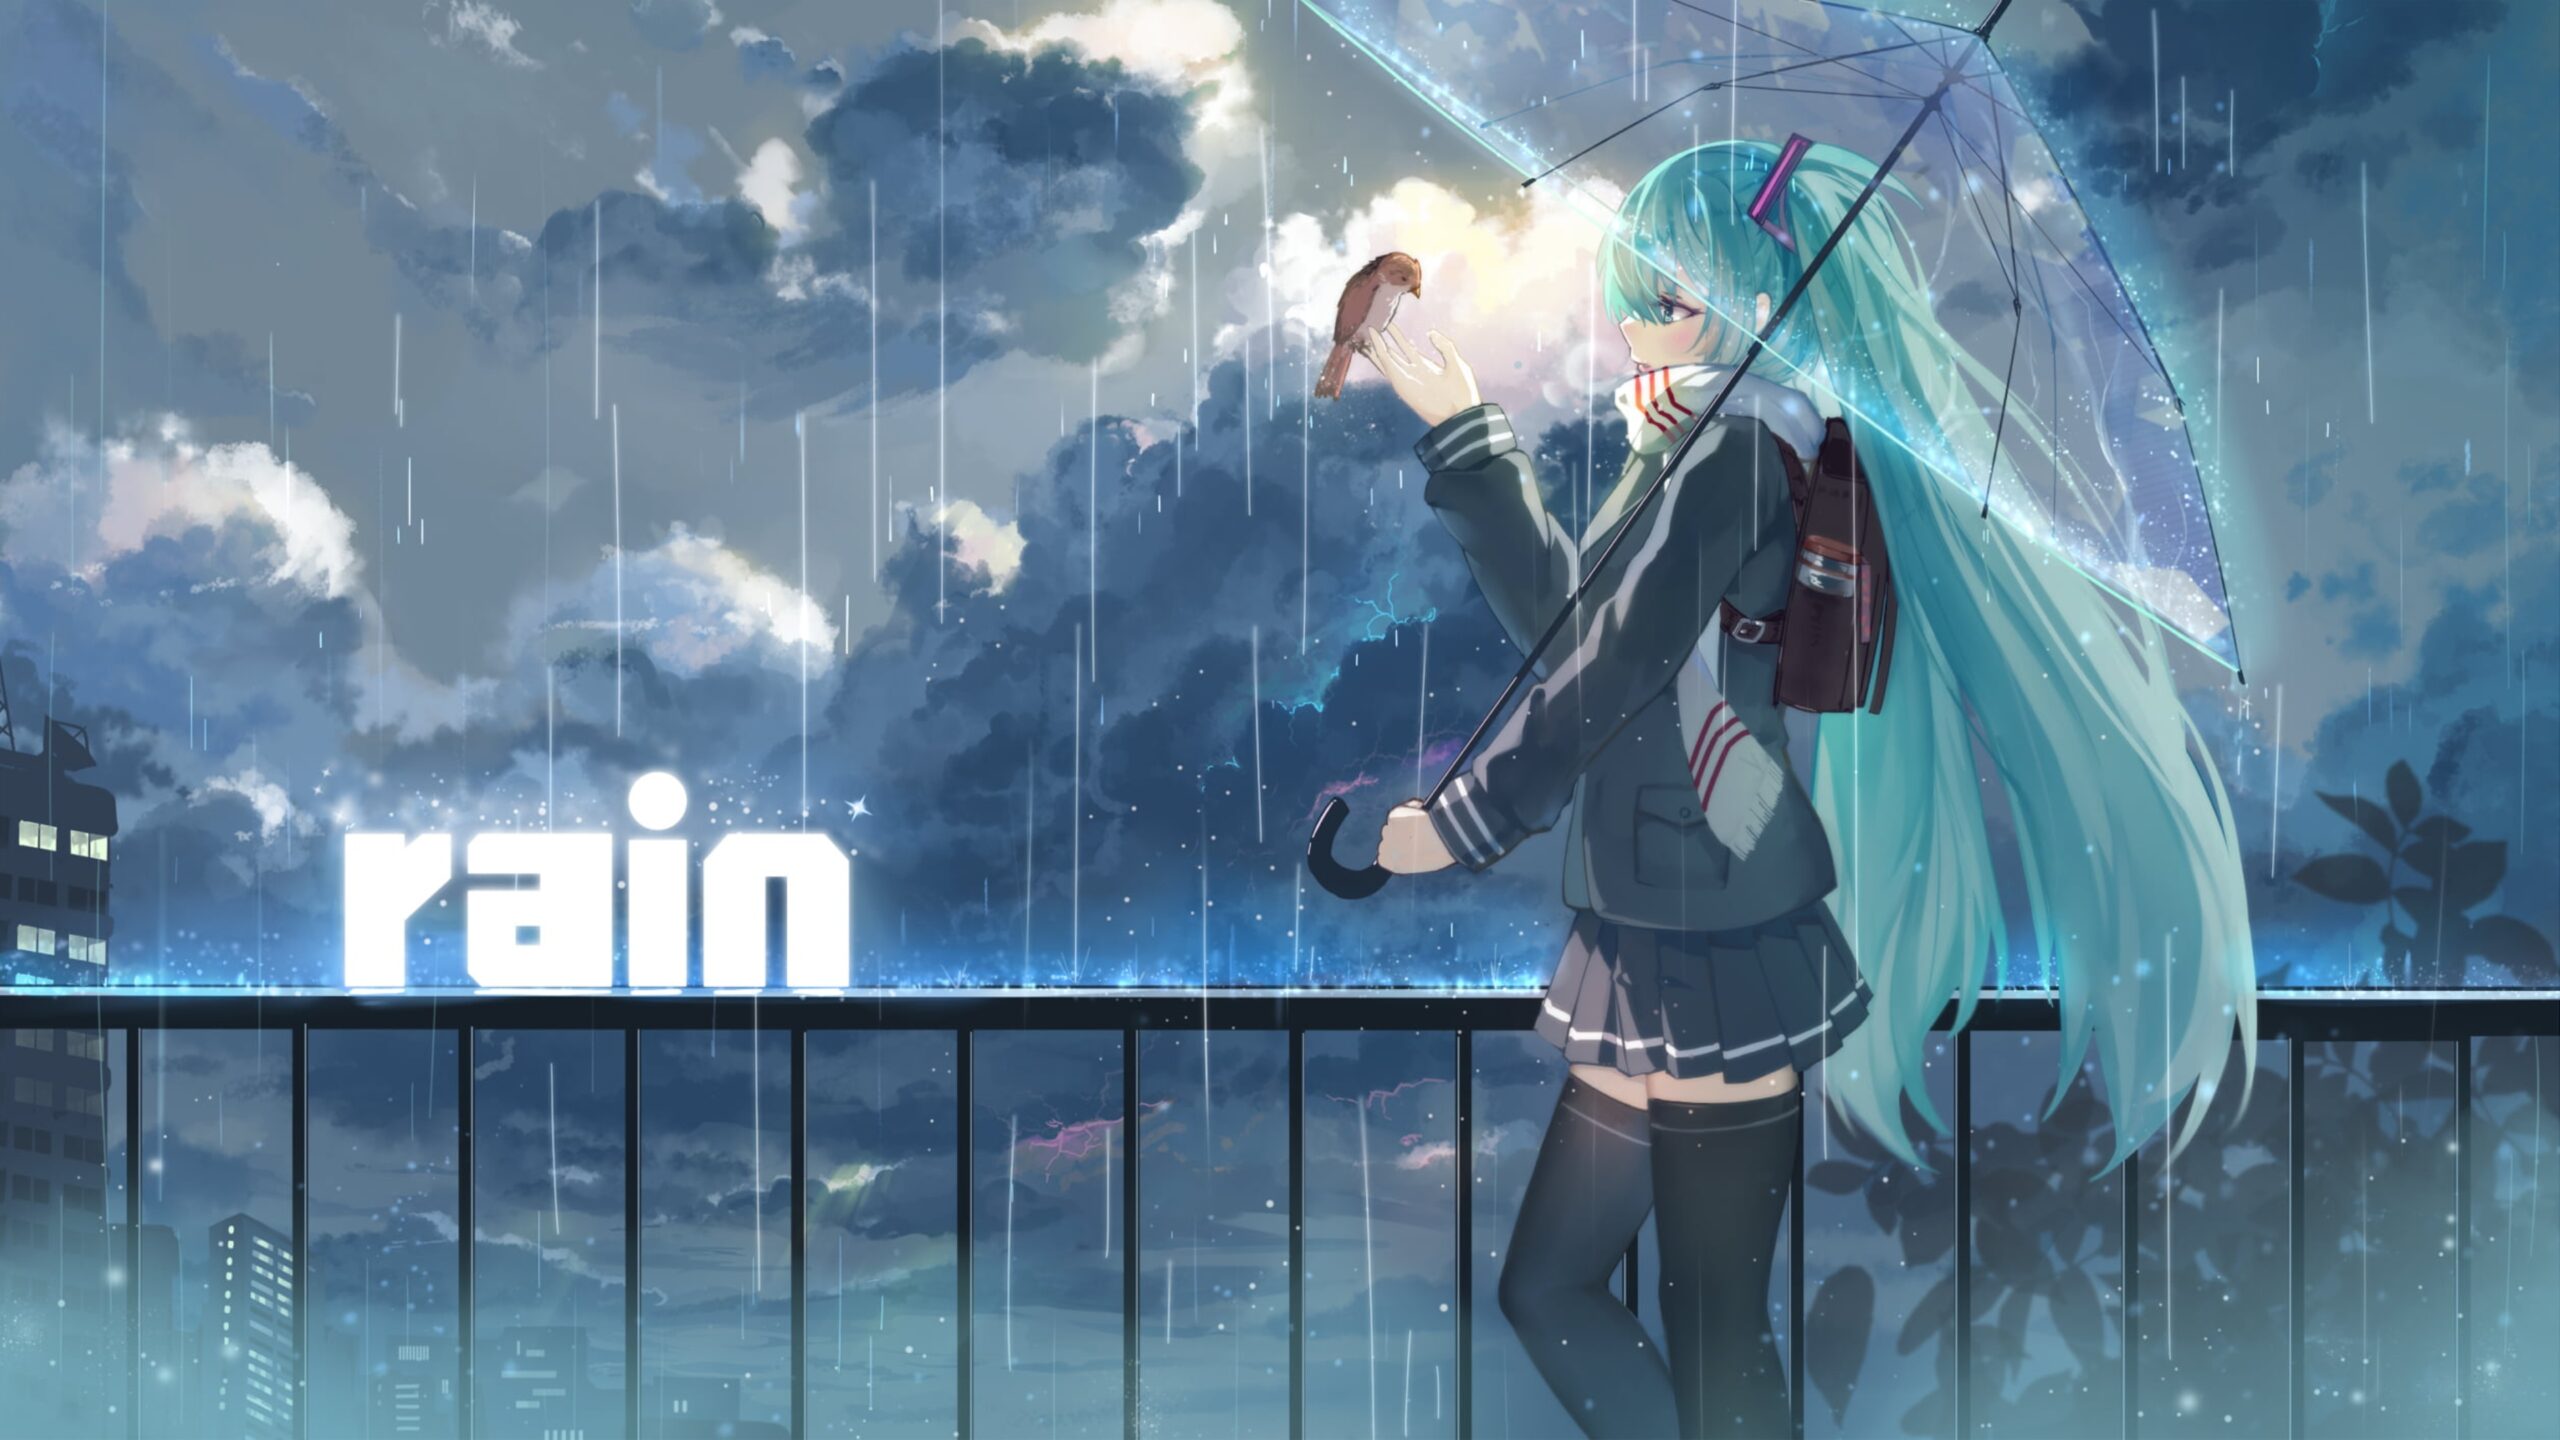 Anime Girl With Umbrella Backgrounds